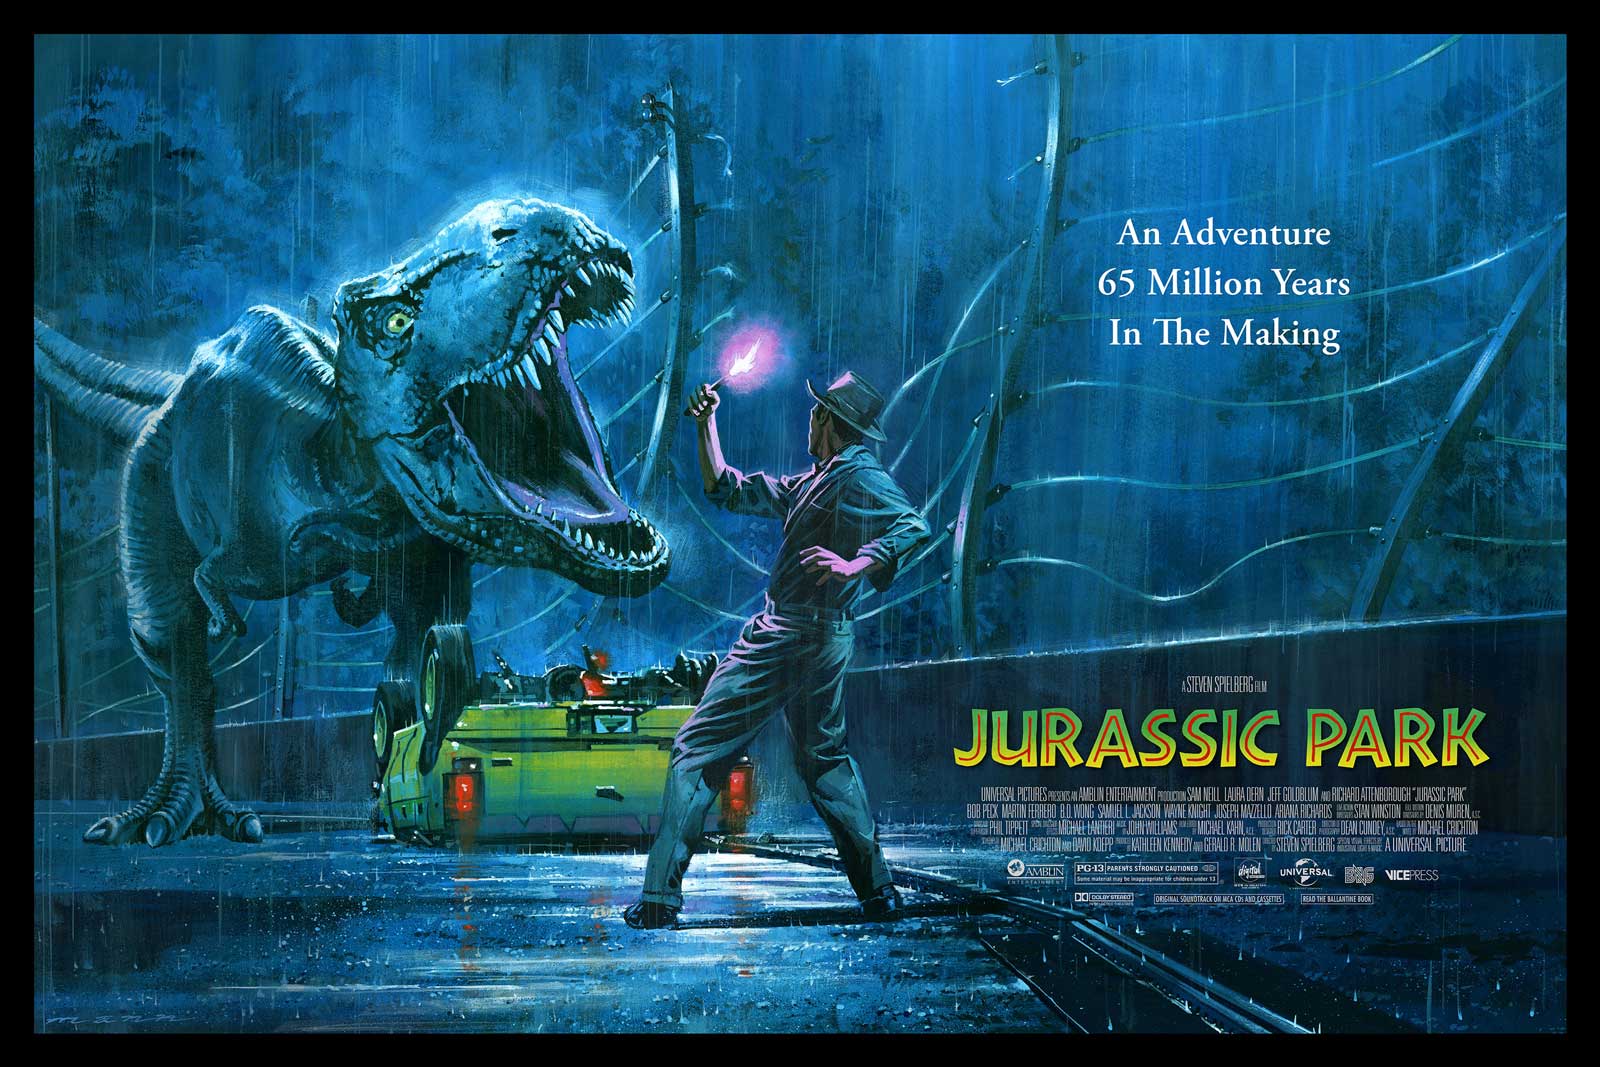 Vice Press - Jurassic Park poster by Paul Mann